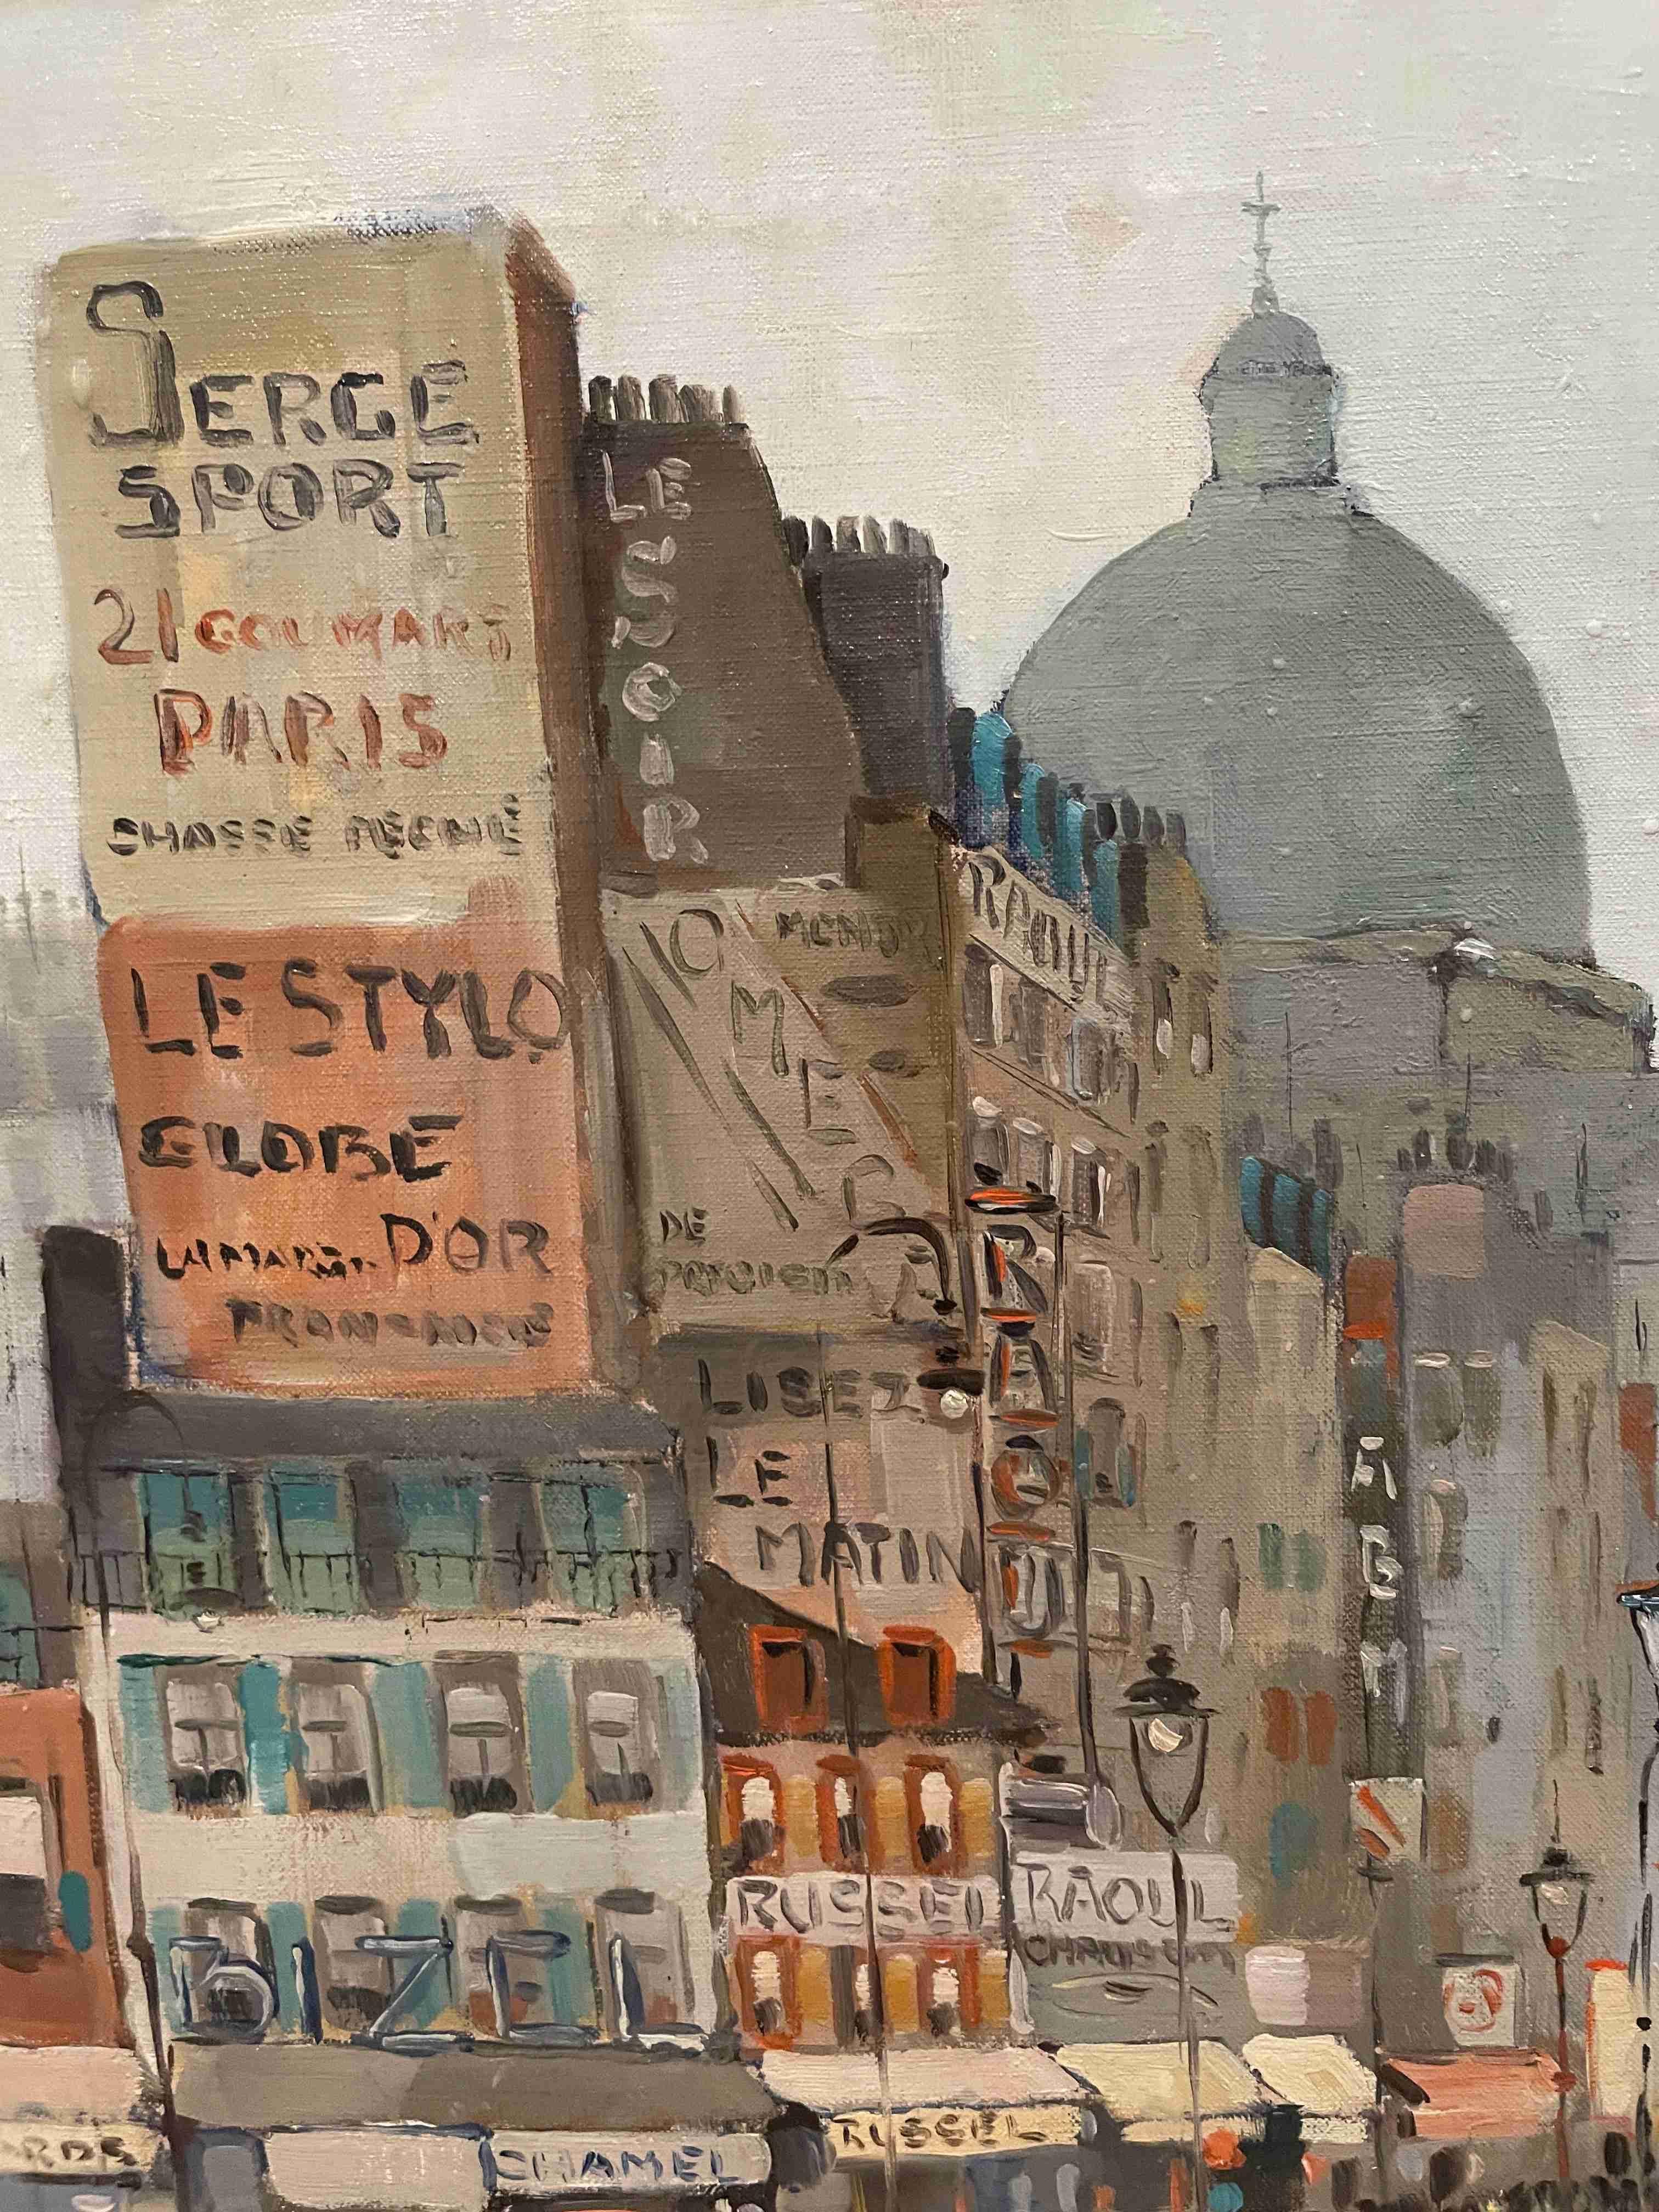 A wonderful, 1950s period Paris Street scene by artist Marcel Godin.